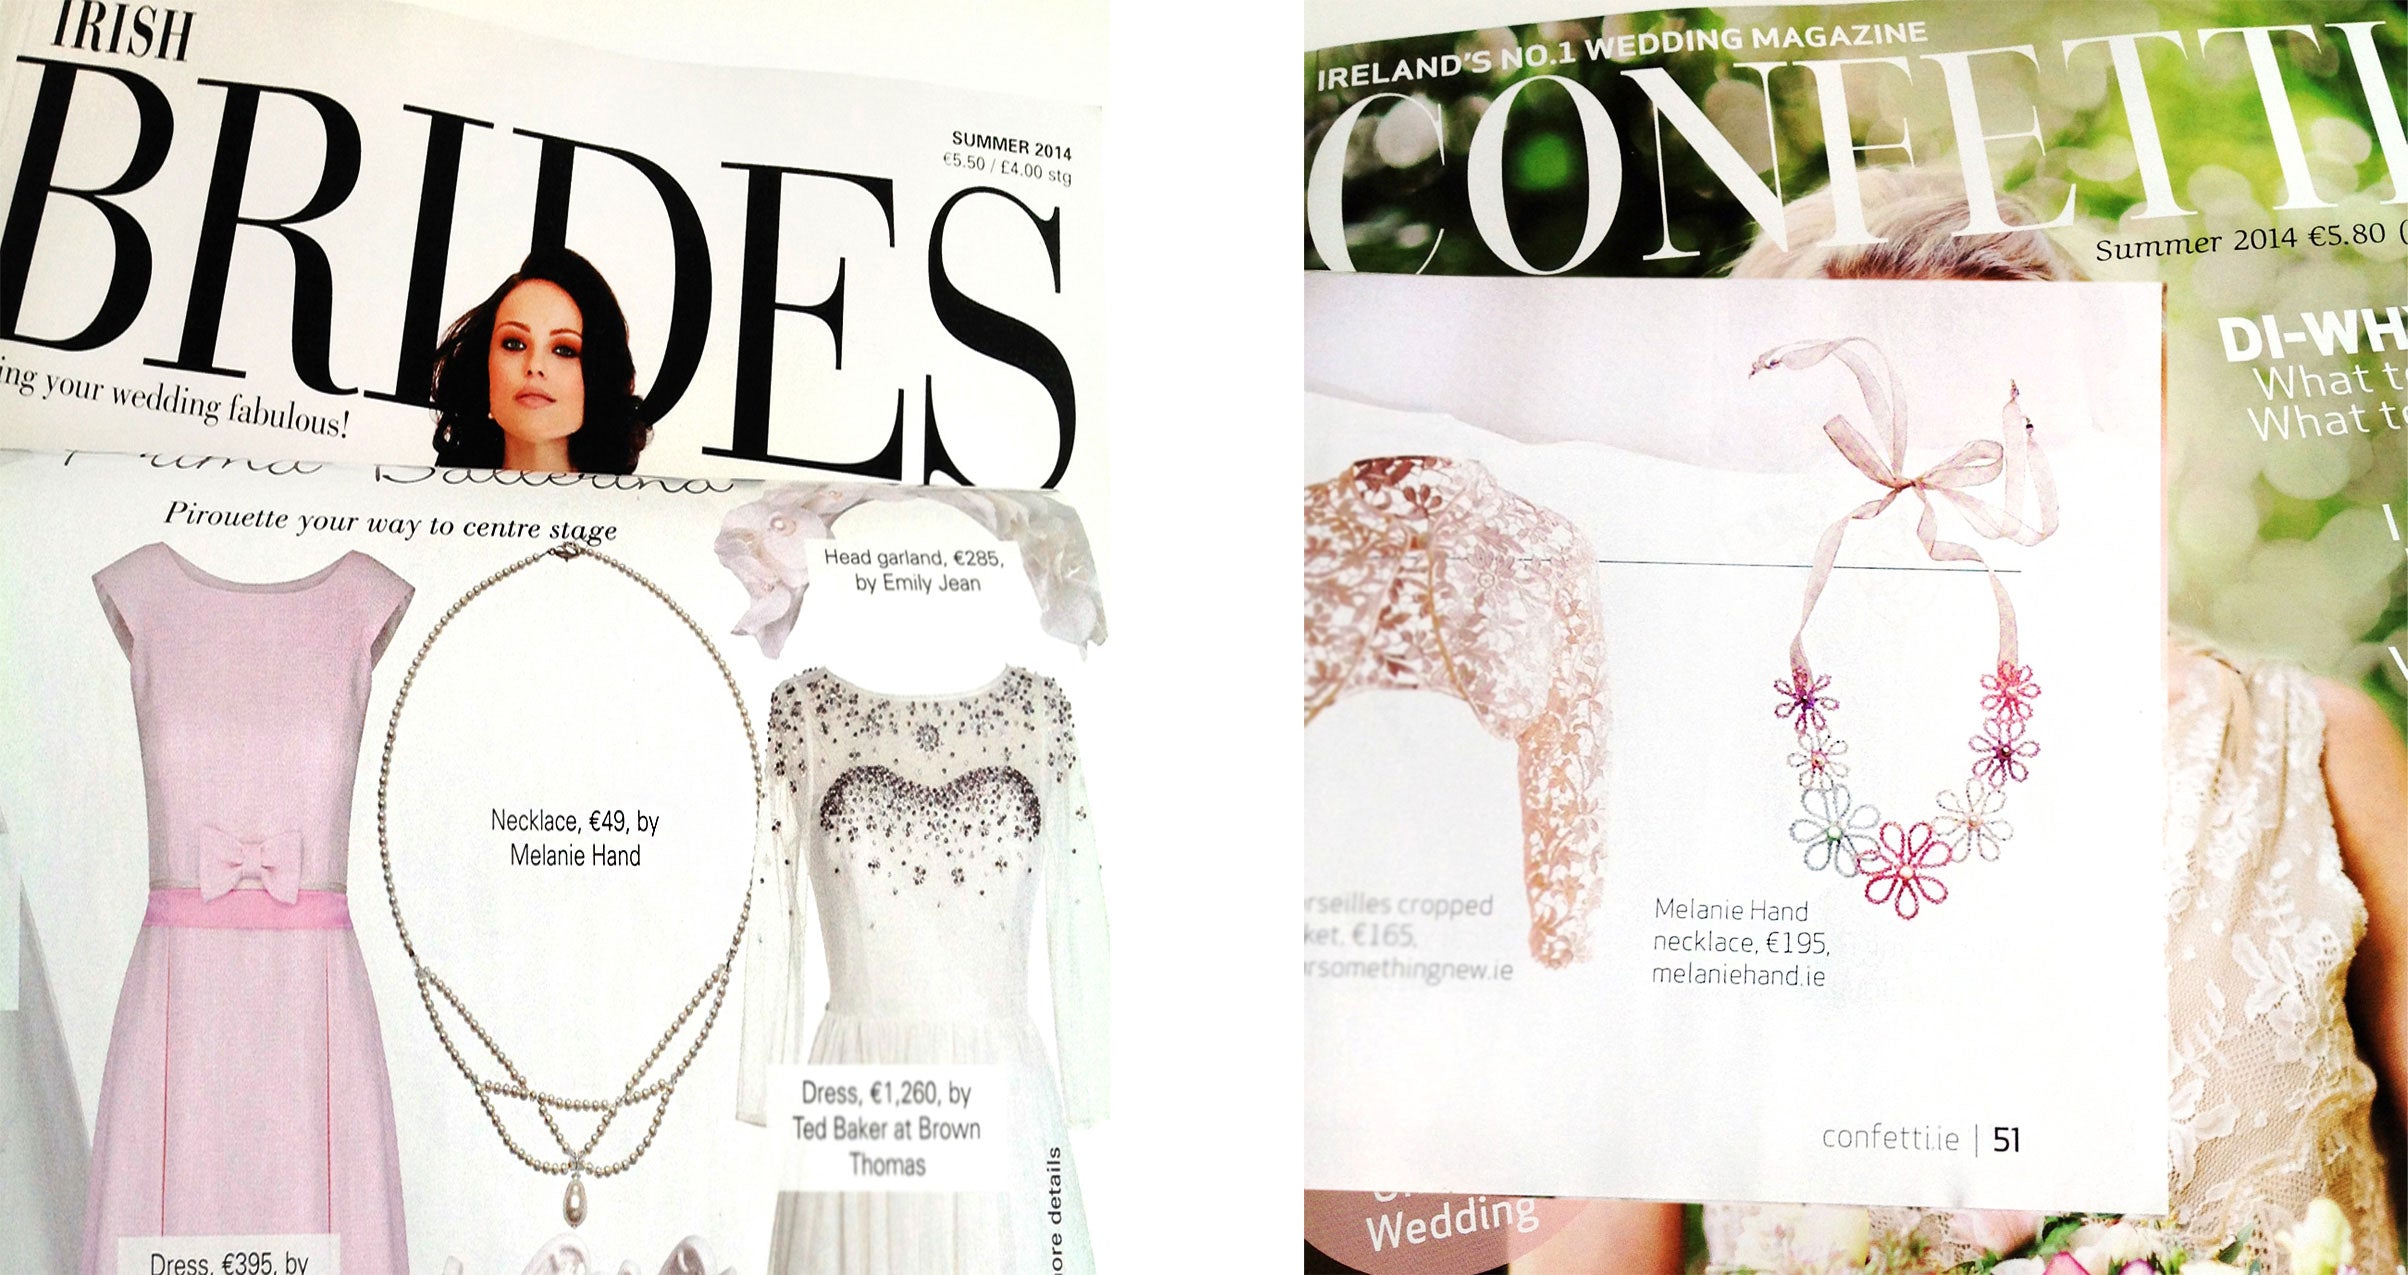 Melanie Hand Irish Designer Jewellery in Irish Brides and Confetti Magazine